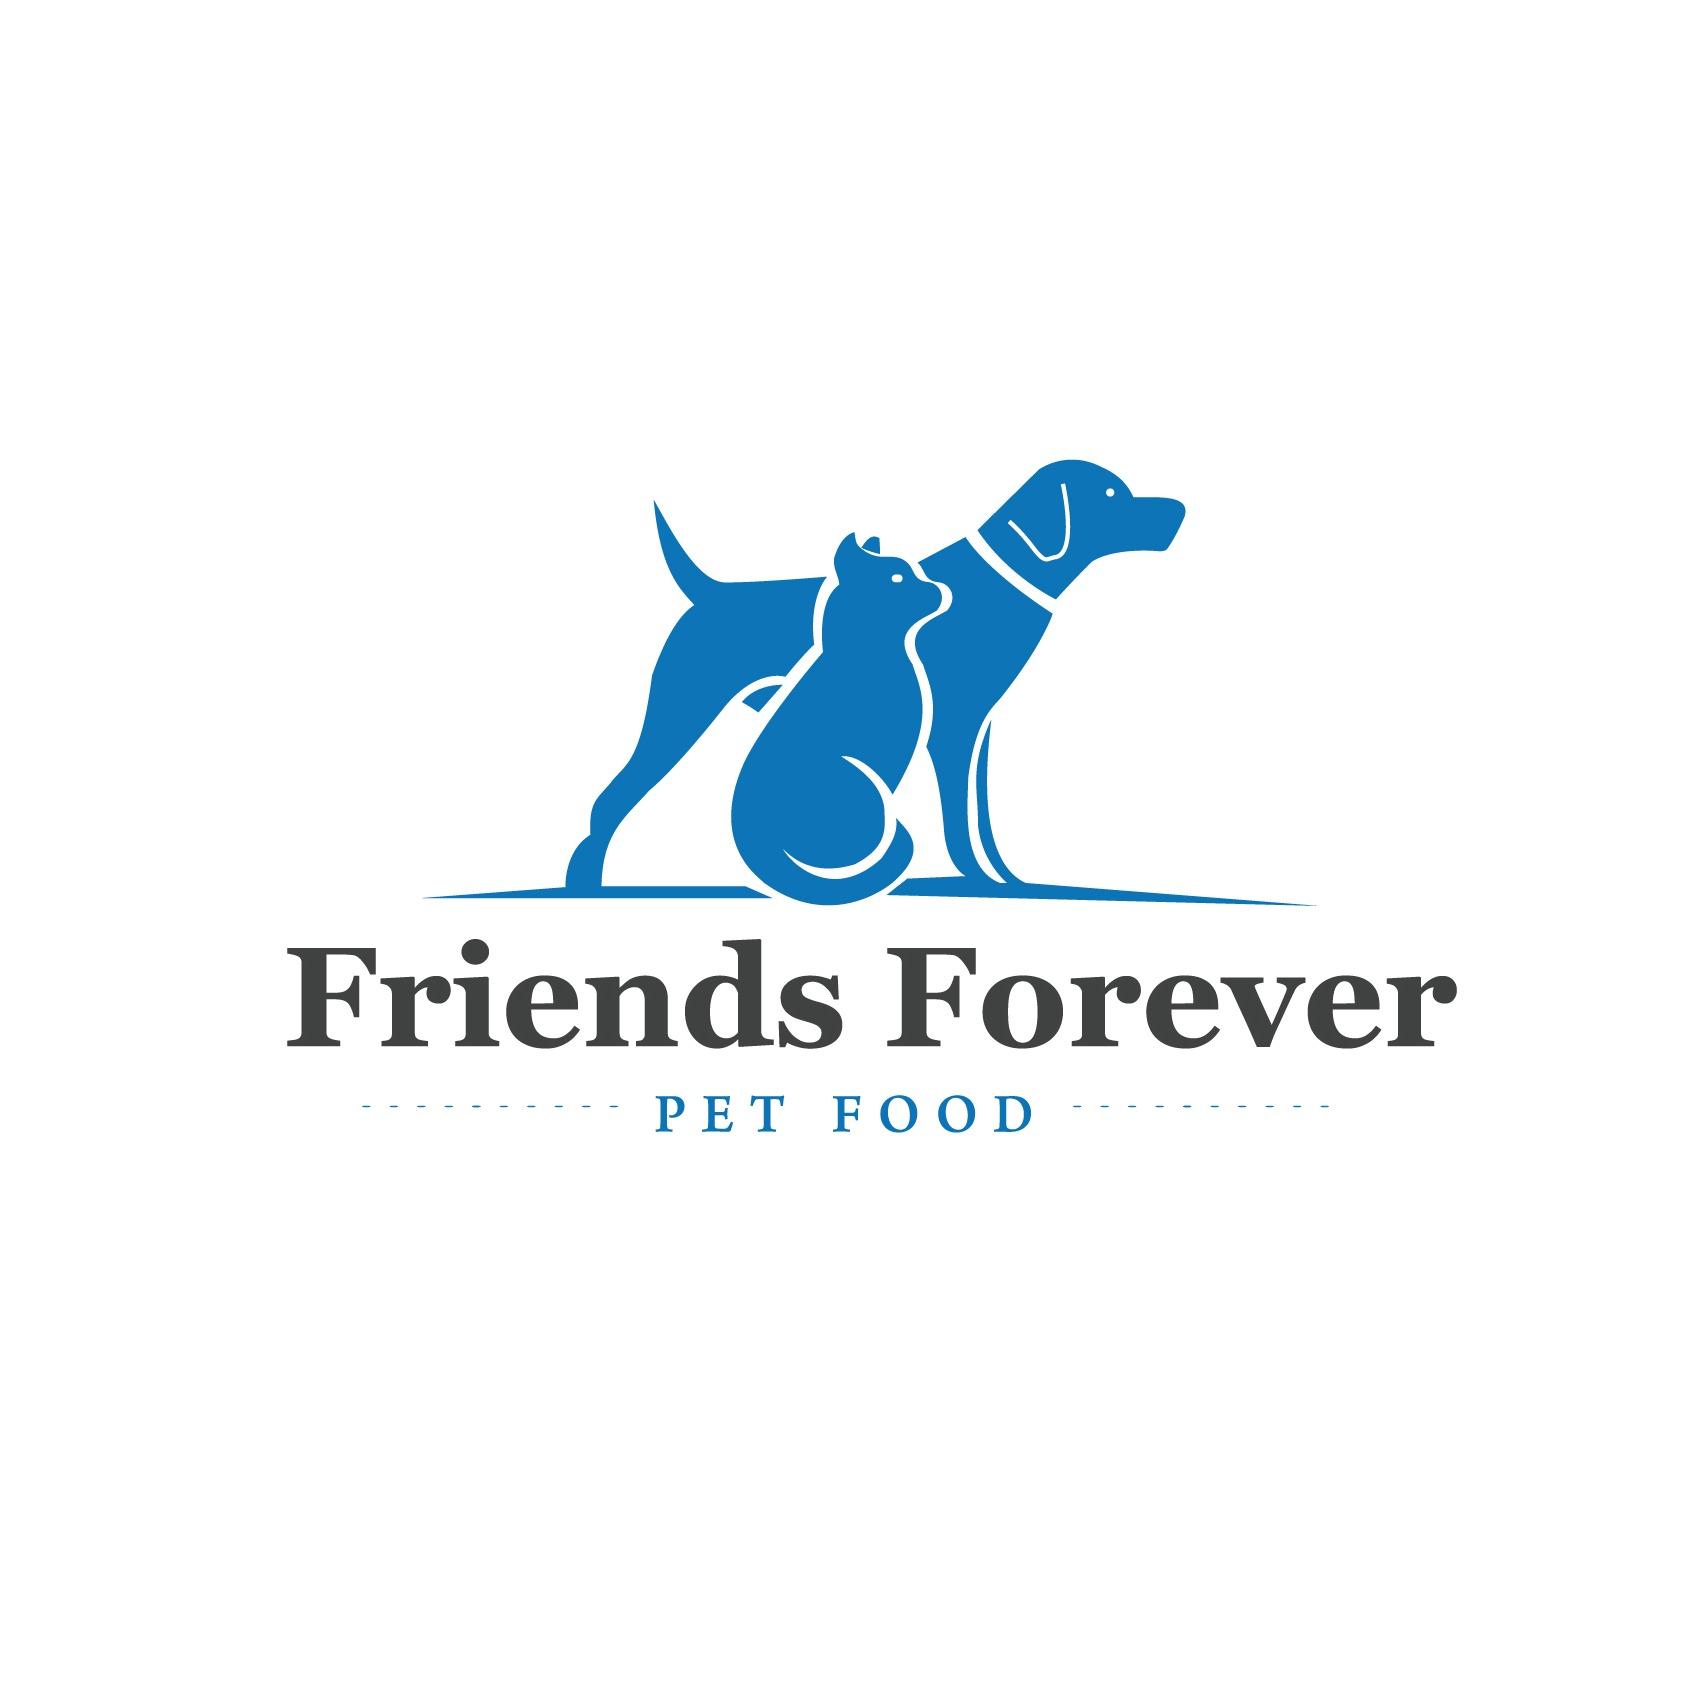 Friends Forever Pet Food Logo